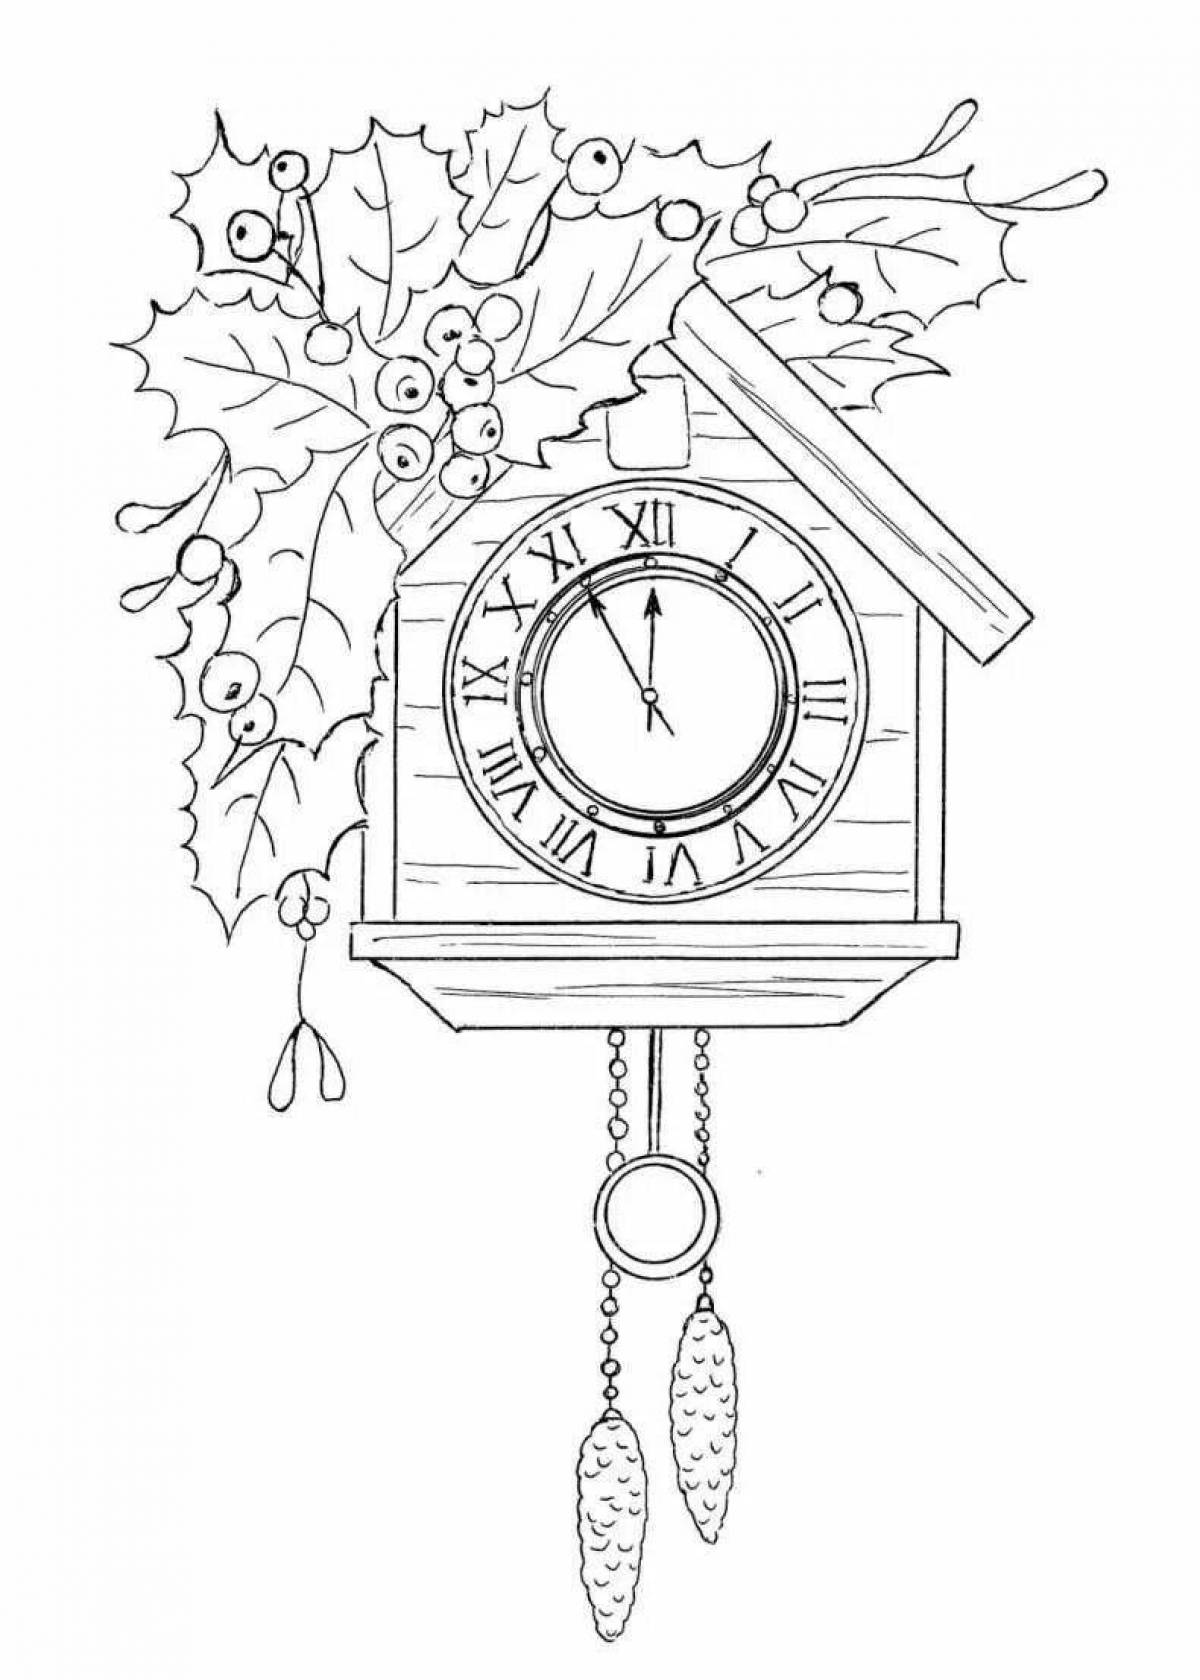 Coloring page dazzling cuckoo clock